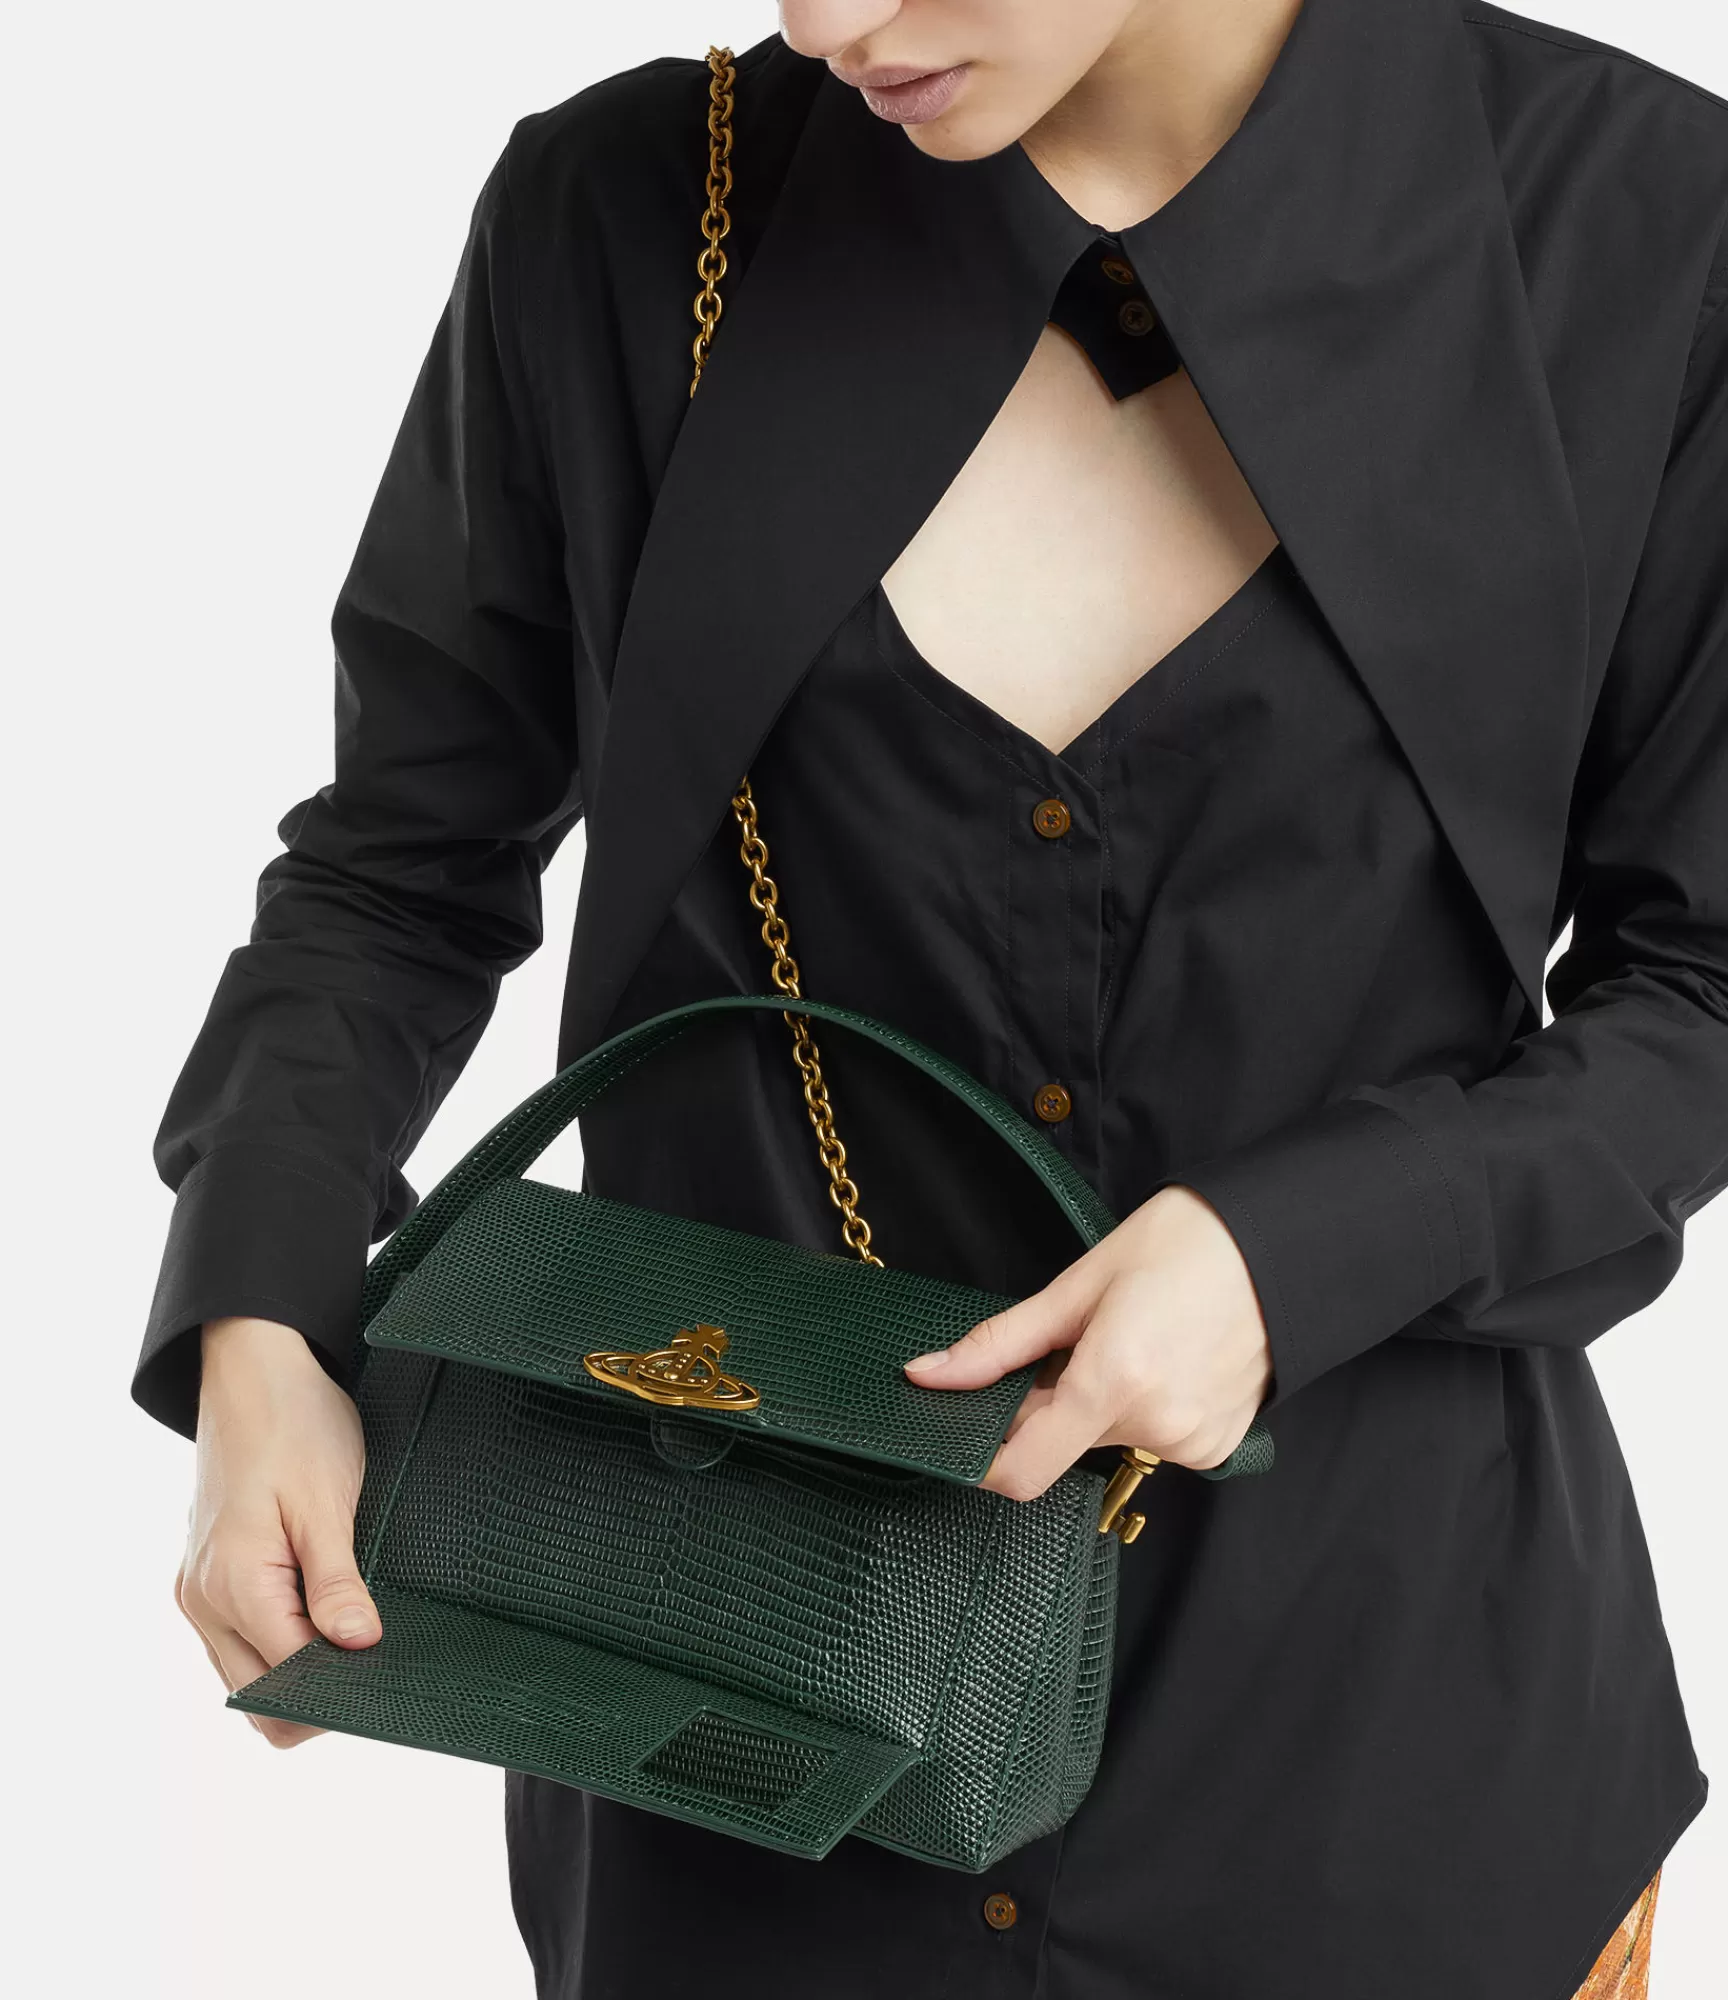 Vivienne Westwood Handbags*Hazel medium handbag Green